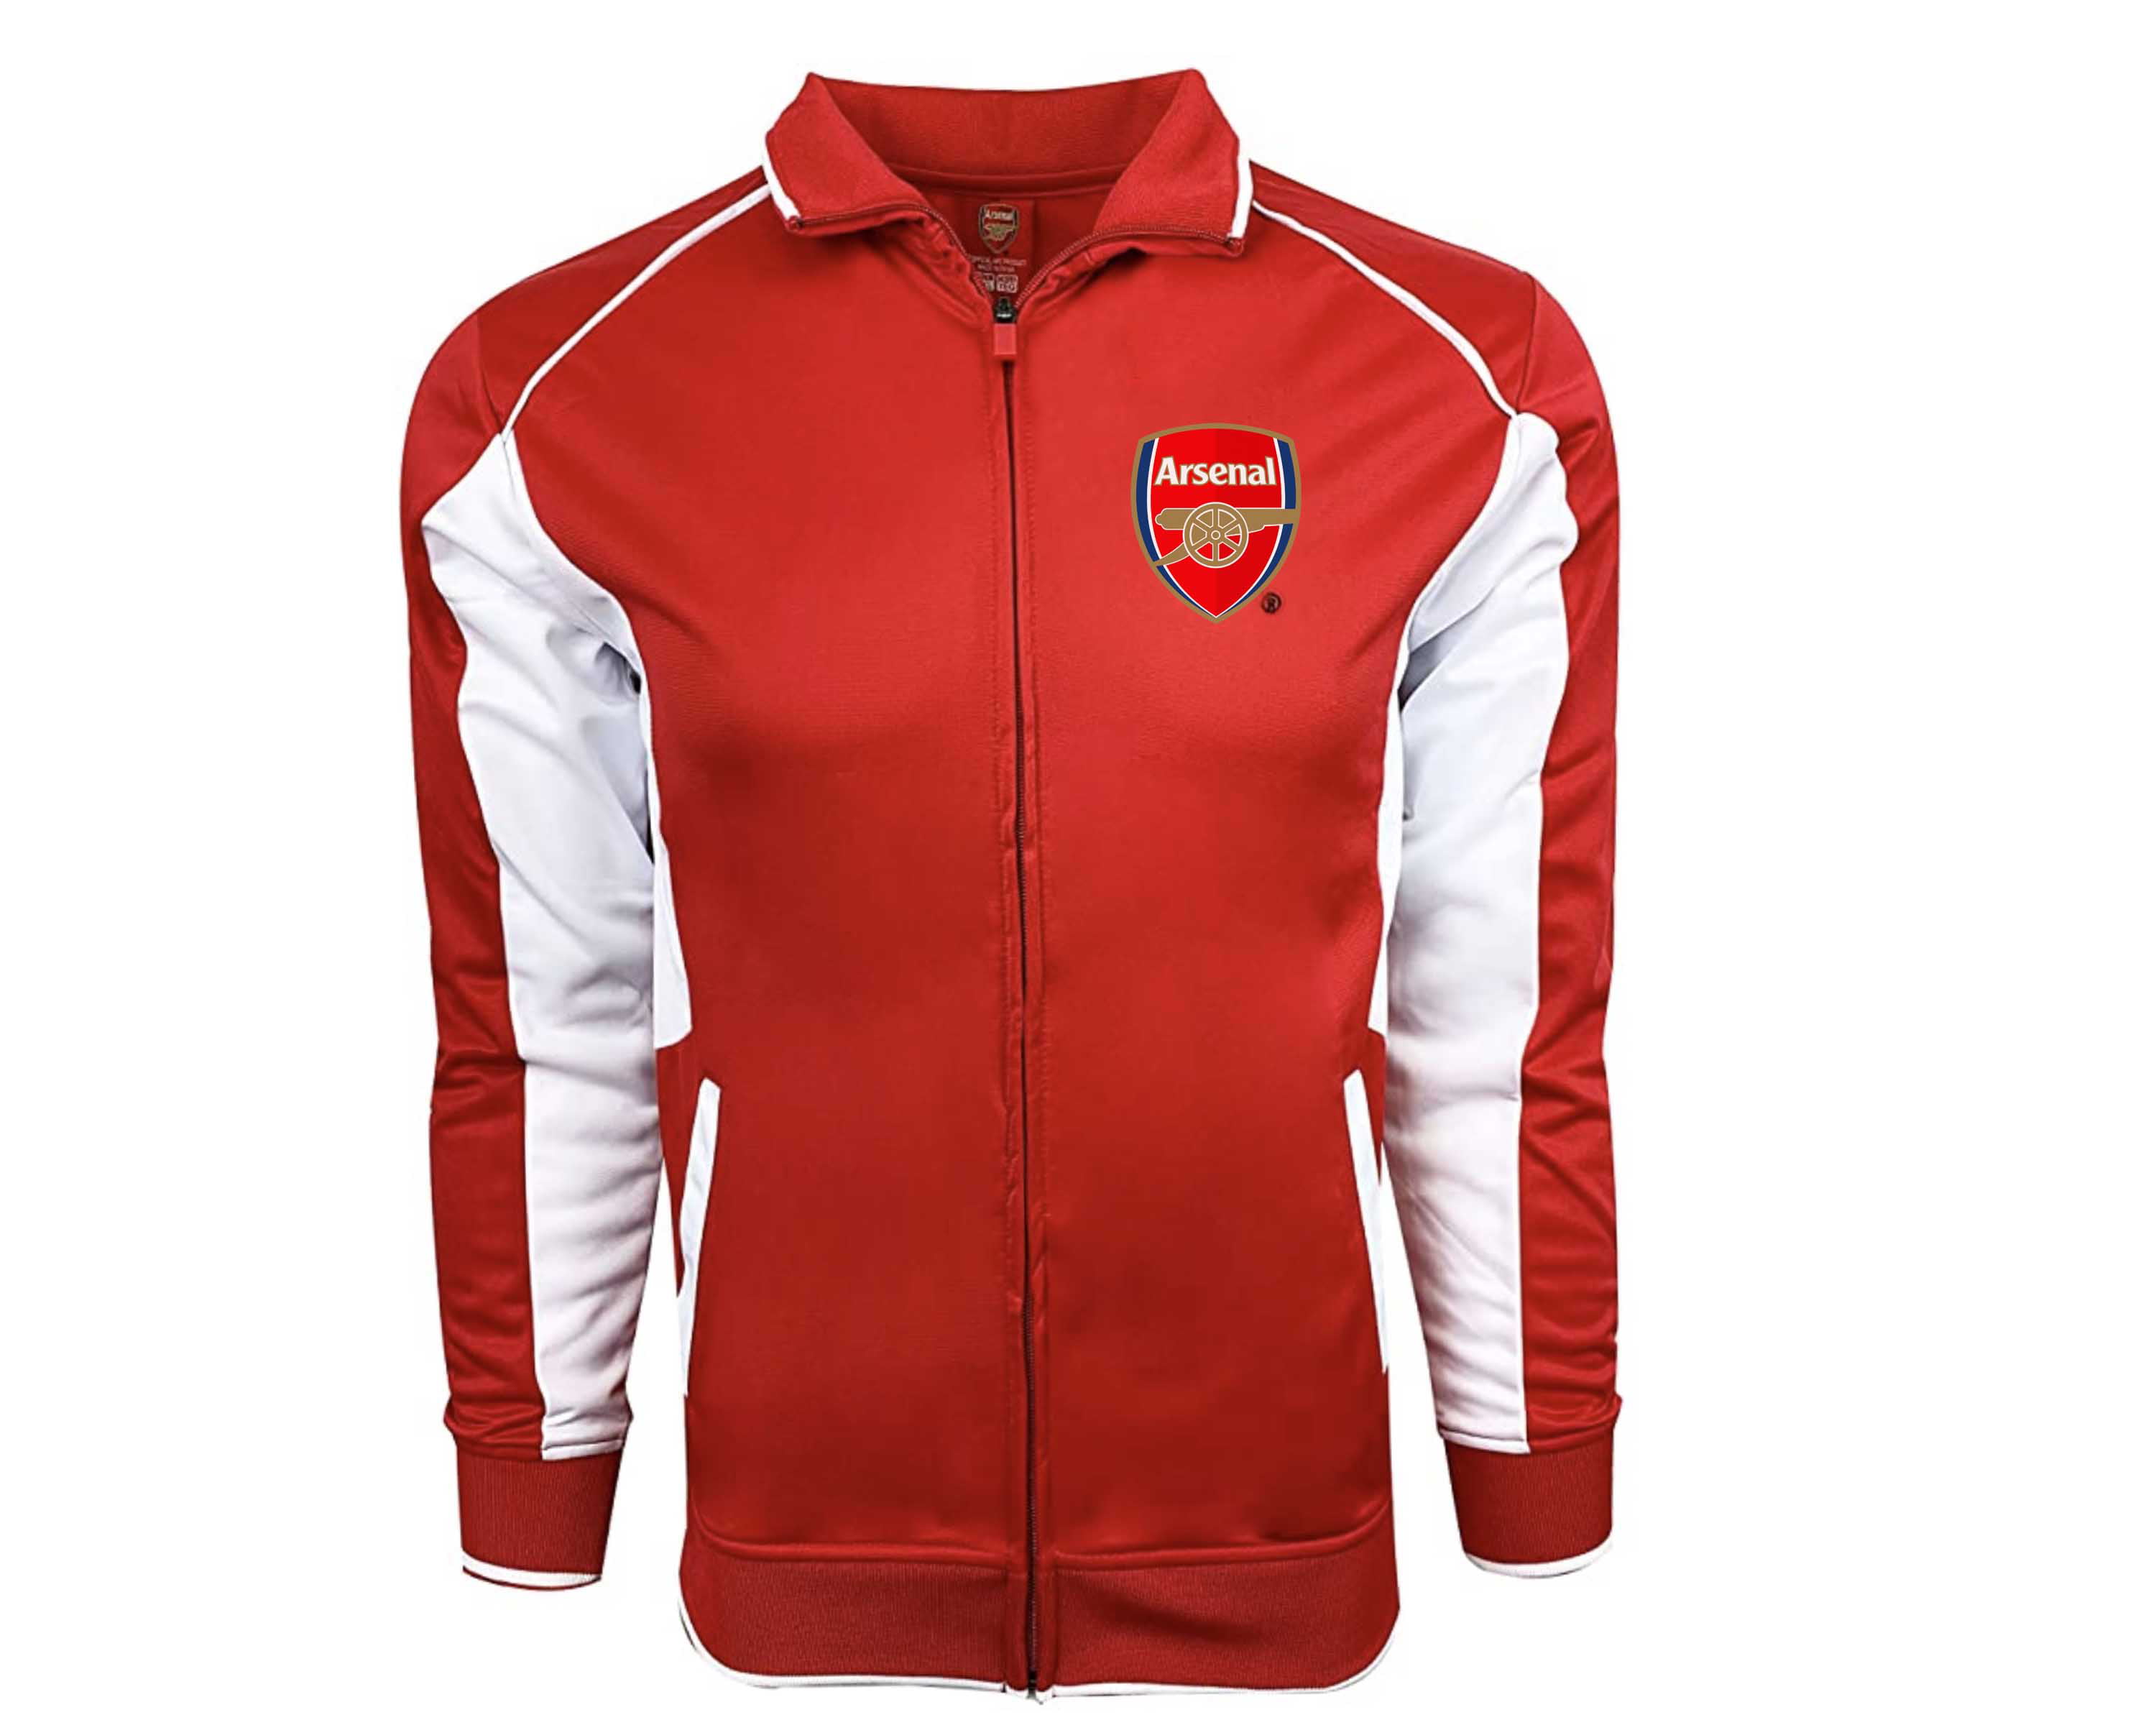 Boy's Arsenal Jacket, Official Arsenal Track Jacket, Youth Sizes